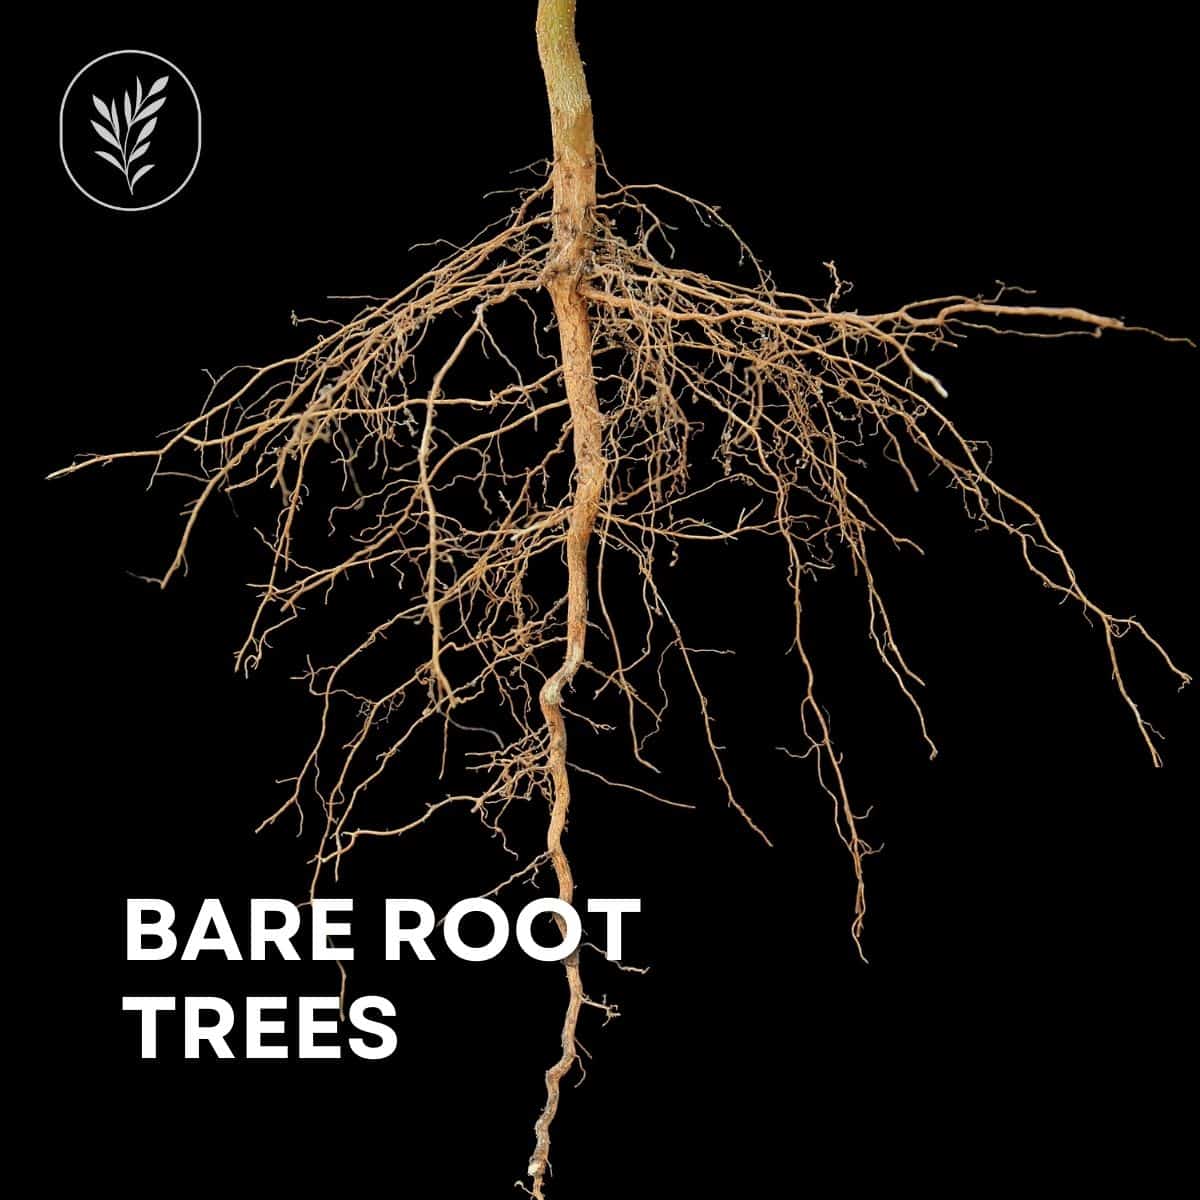 Bare root trees via @home4theharvest